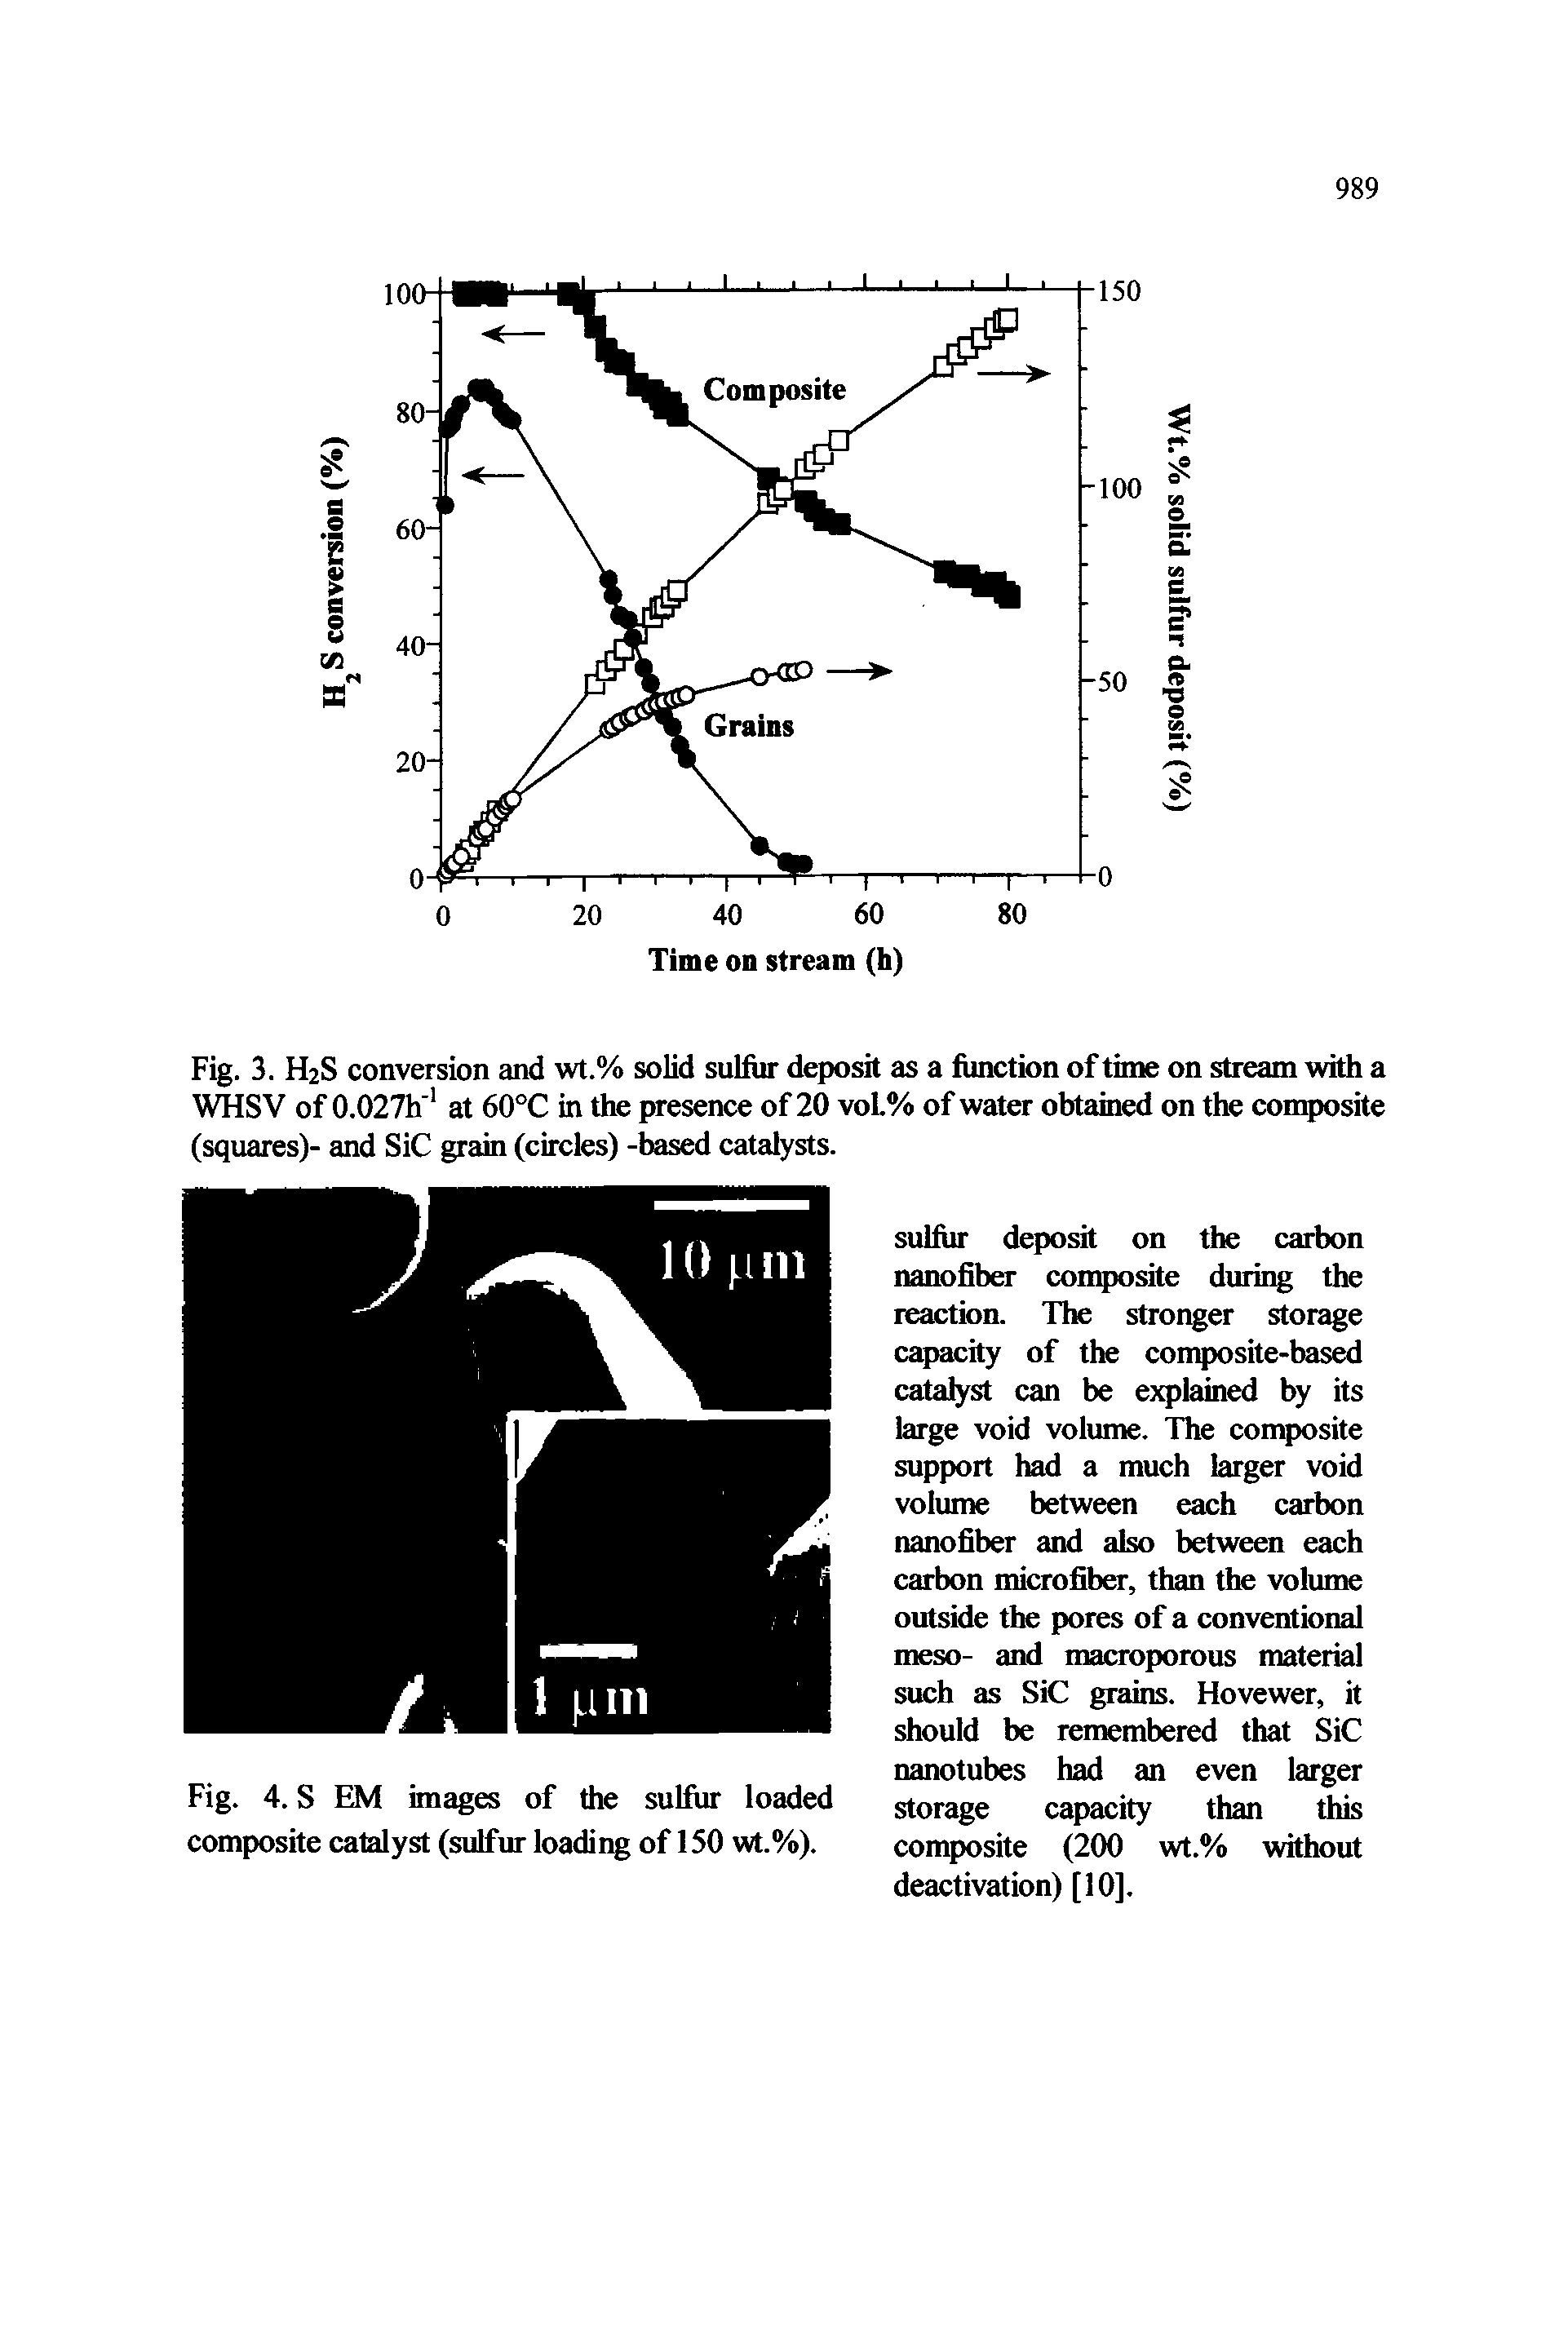 Fig. 4. S EM images of the sulfur loaded composite catalyst (sulfur loading of 150 wt.%).